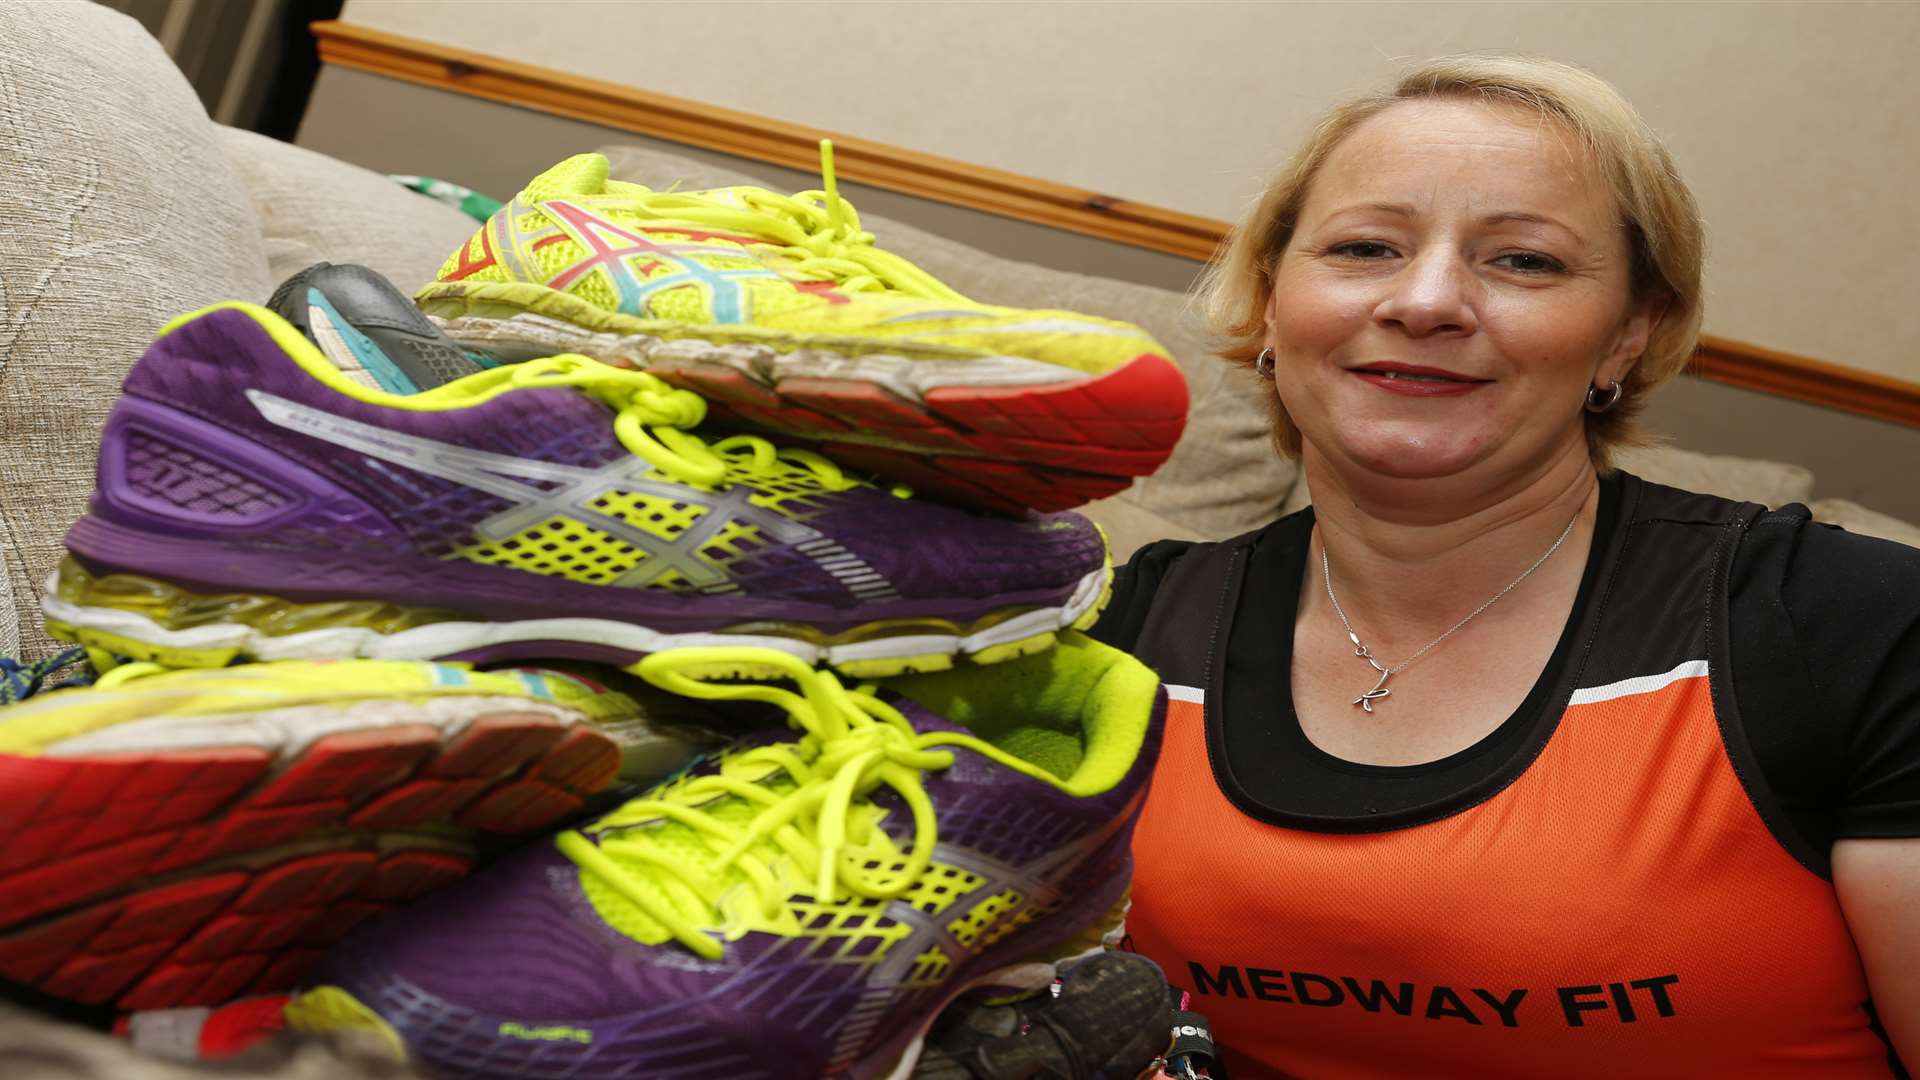 Kirsty Winwood is set to run more than 40 marathons this year